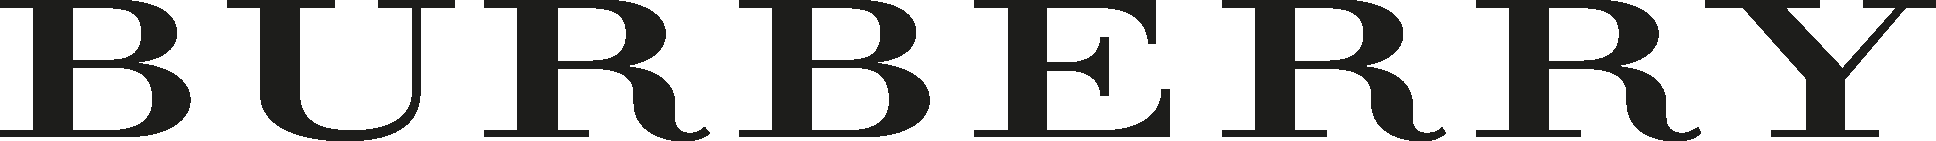 Burberry Logo - free download